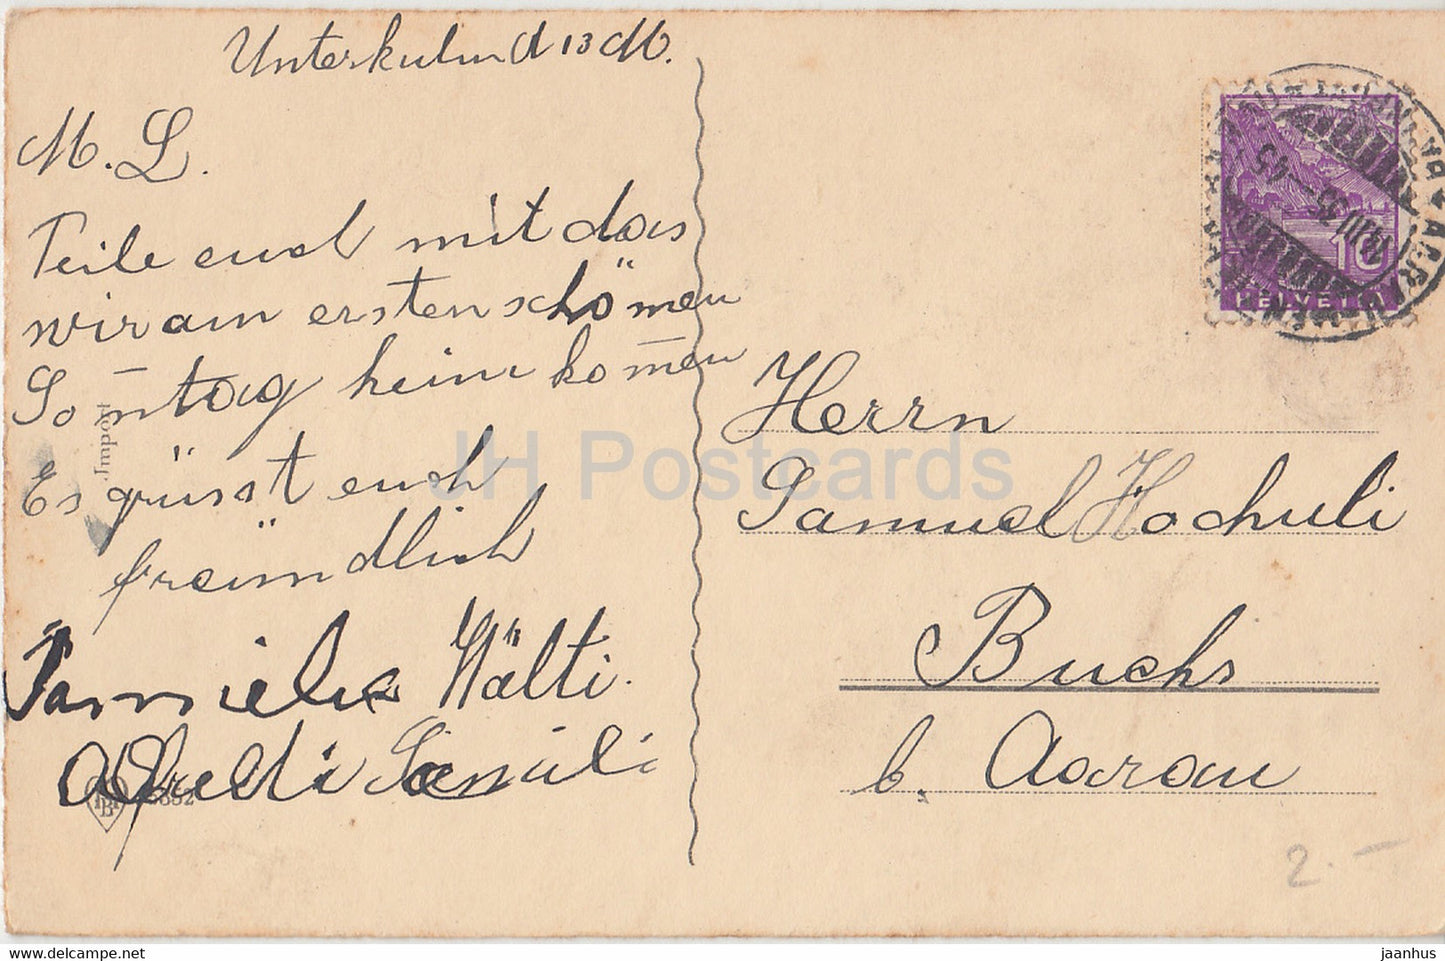 Birthday Greeting Card - Die besten Wunsche zum Geburtstage - girl - flowers - BR old postcard - 1935 - Germany - used